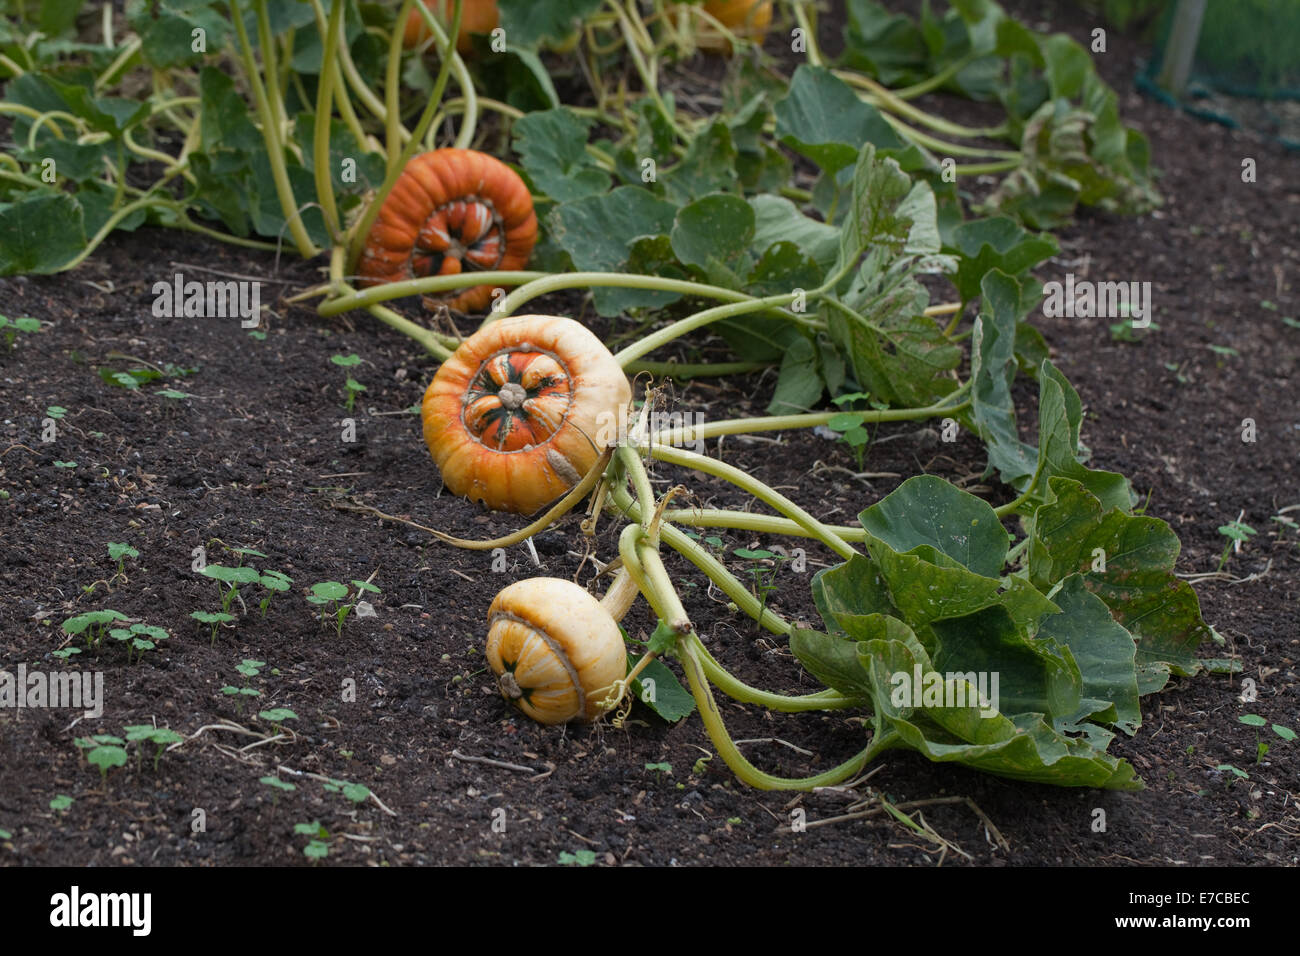 Turk's Turban Pumpkin, Gourd or Squash (Cucurbita maxima). Cultivated ornamental fruits, 'vegetables'. Still attached to plant. Stock Photo